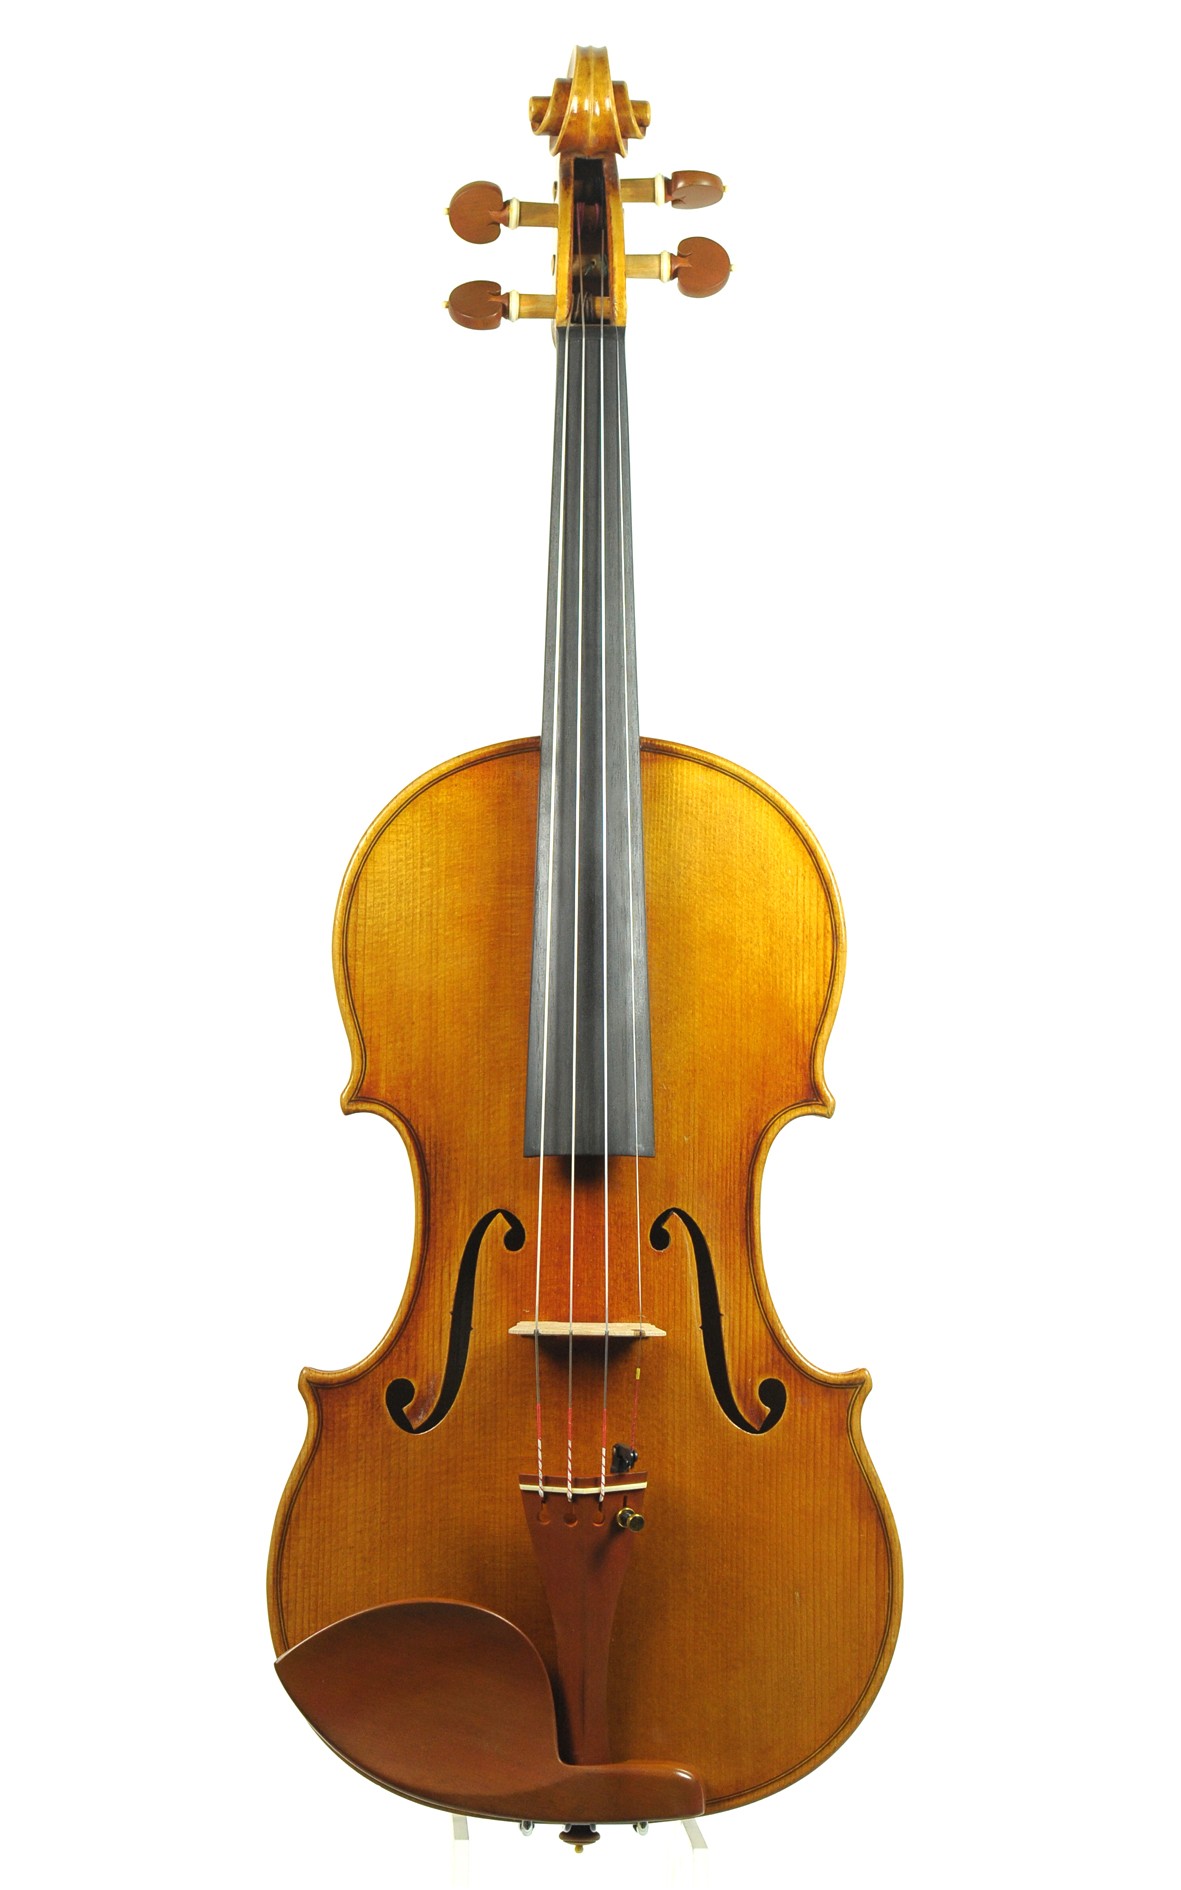 Mittenwald violin by Ottomar Hausmann - top